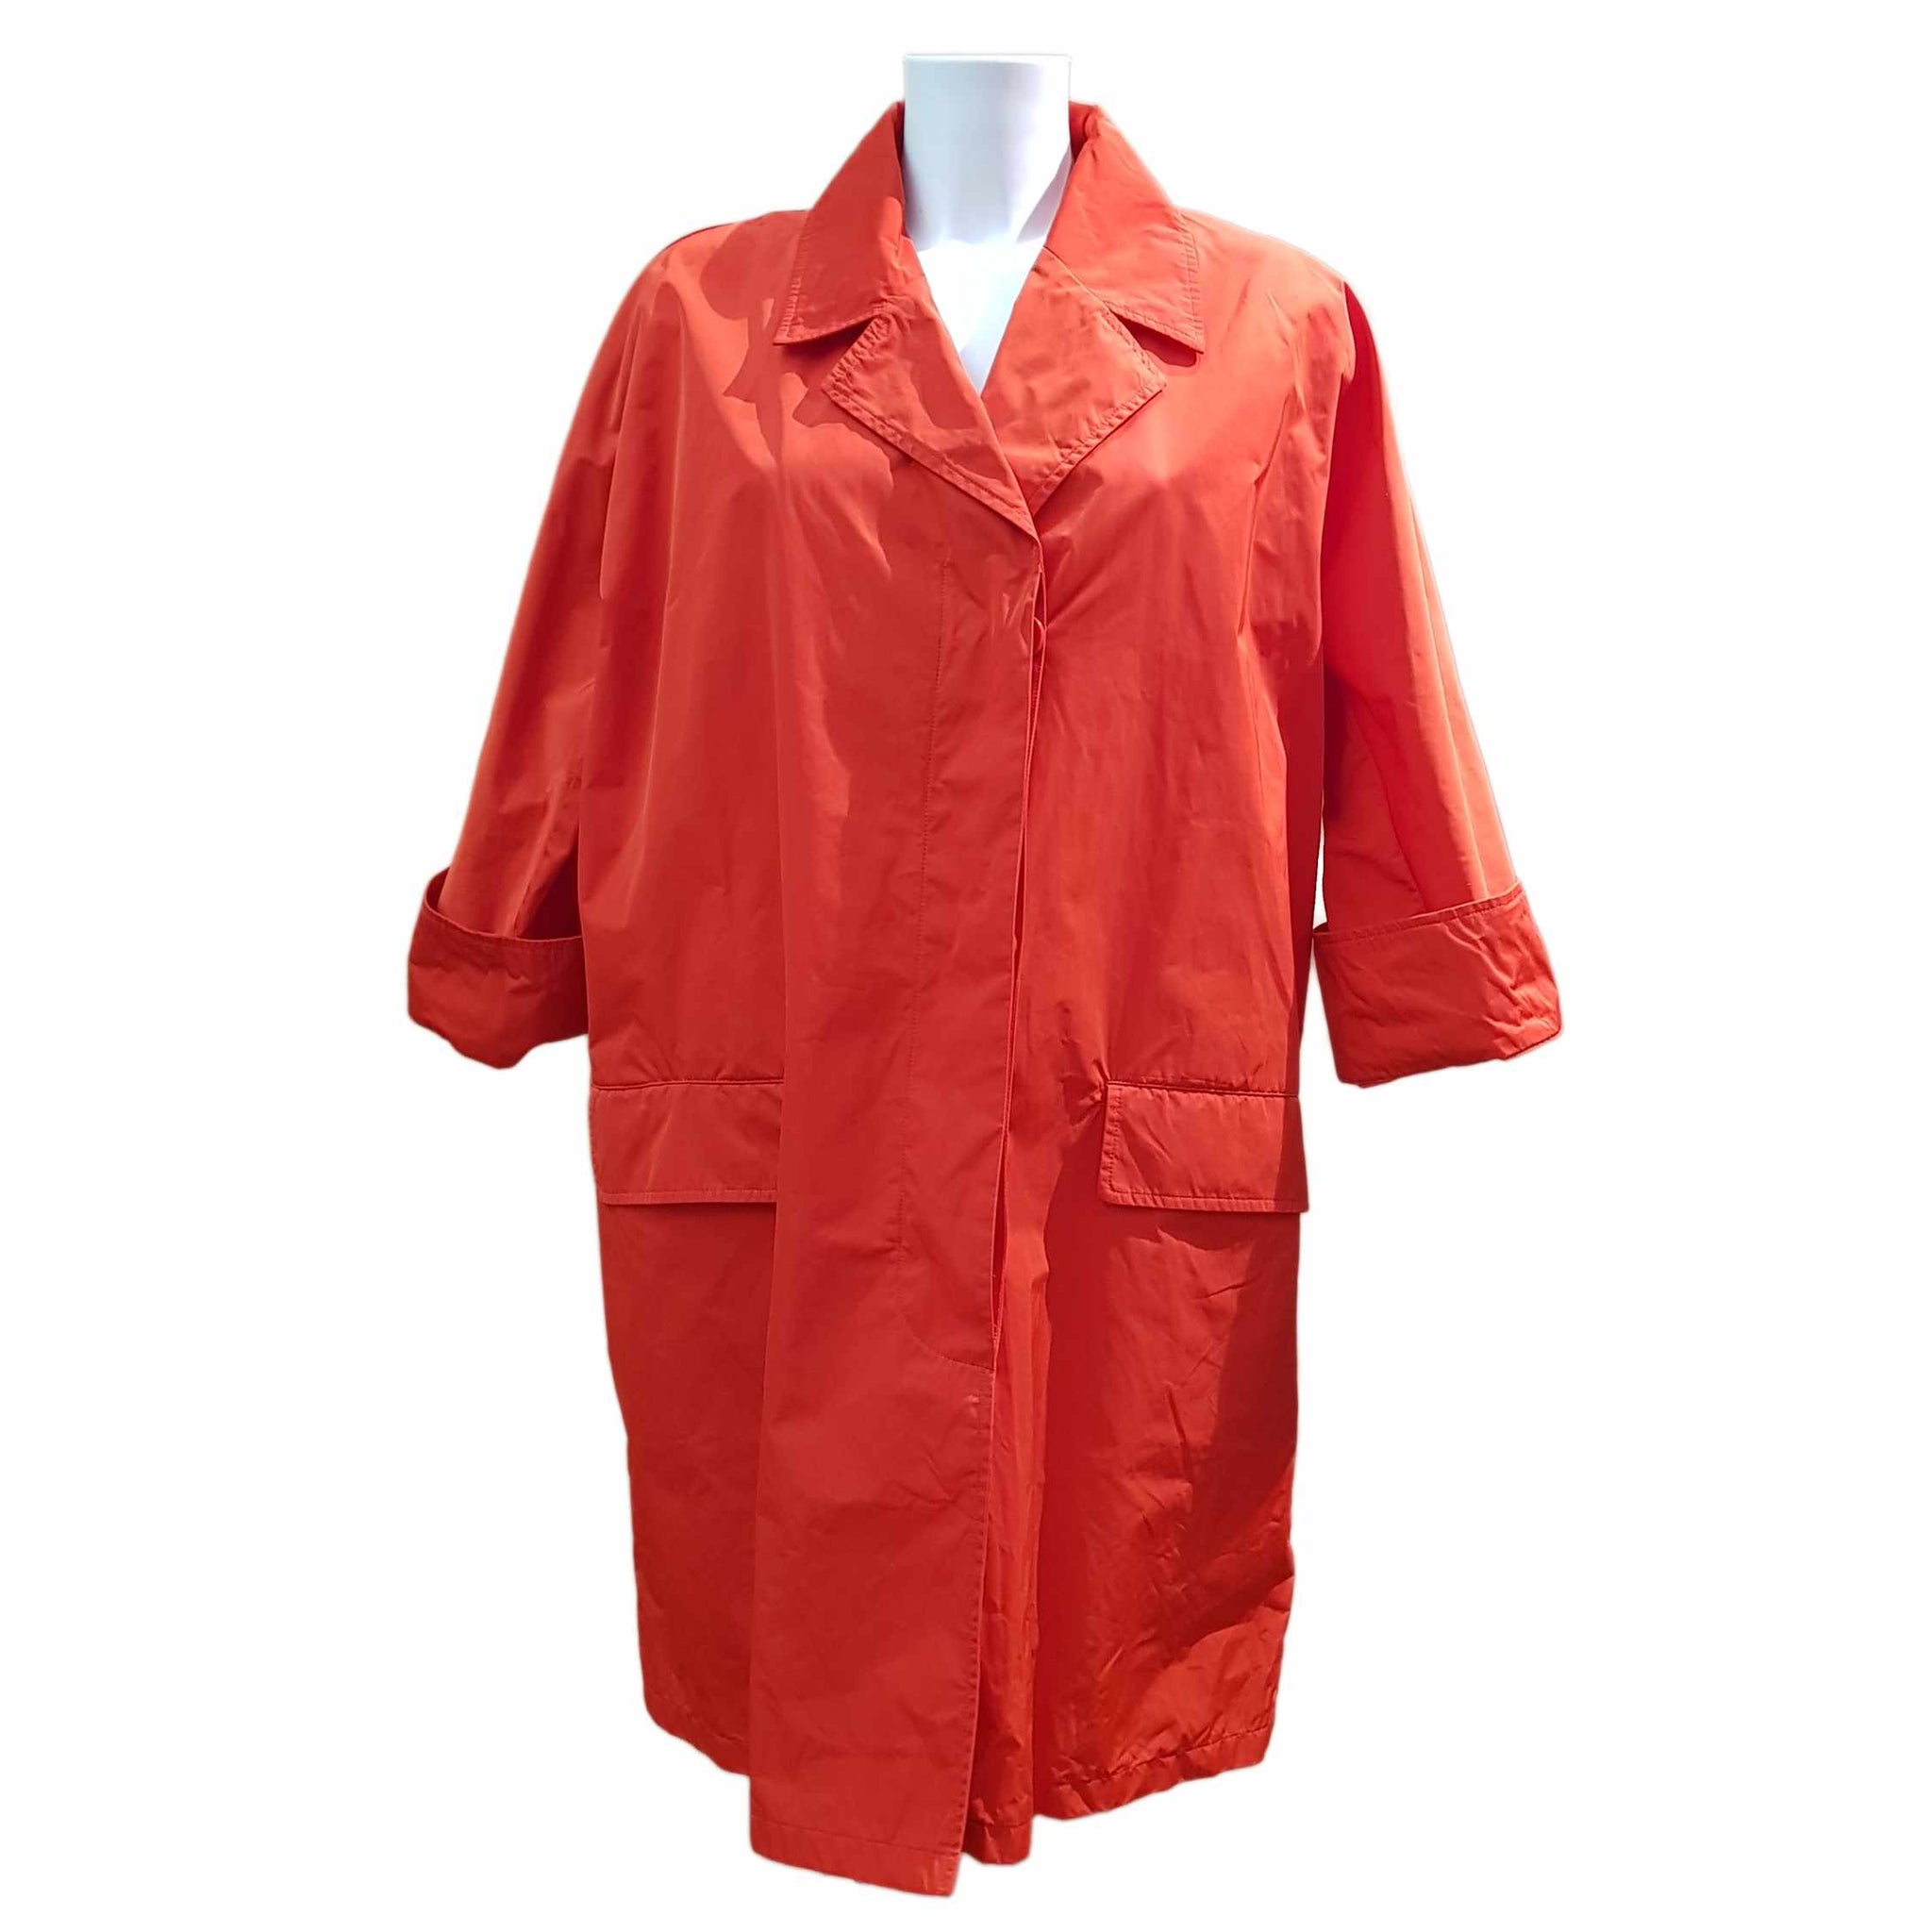 OOF Wear, leichter A- Linien Mantel in Rot